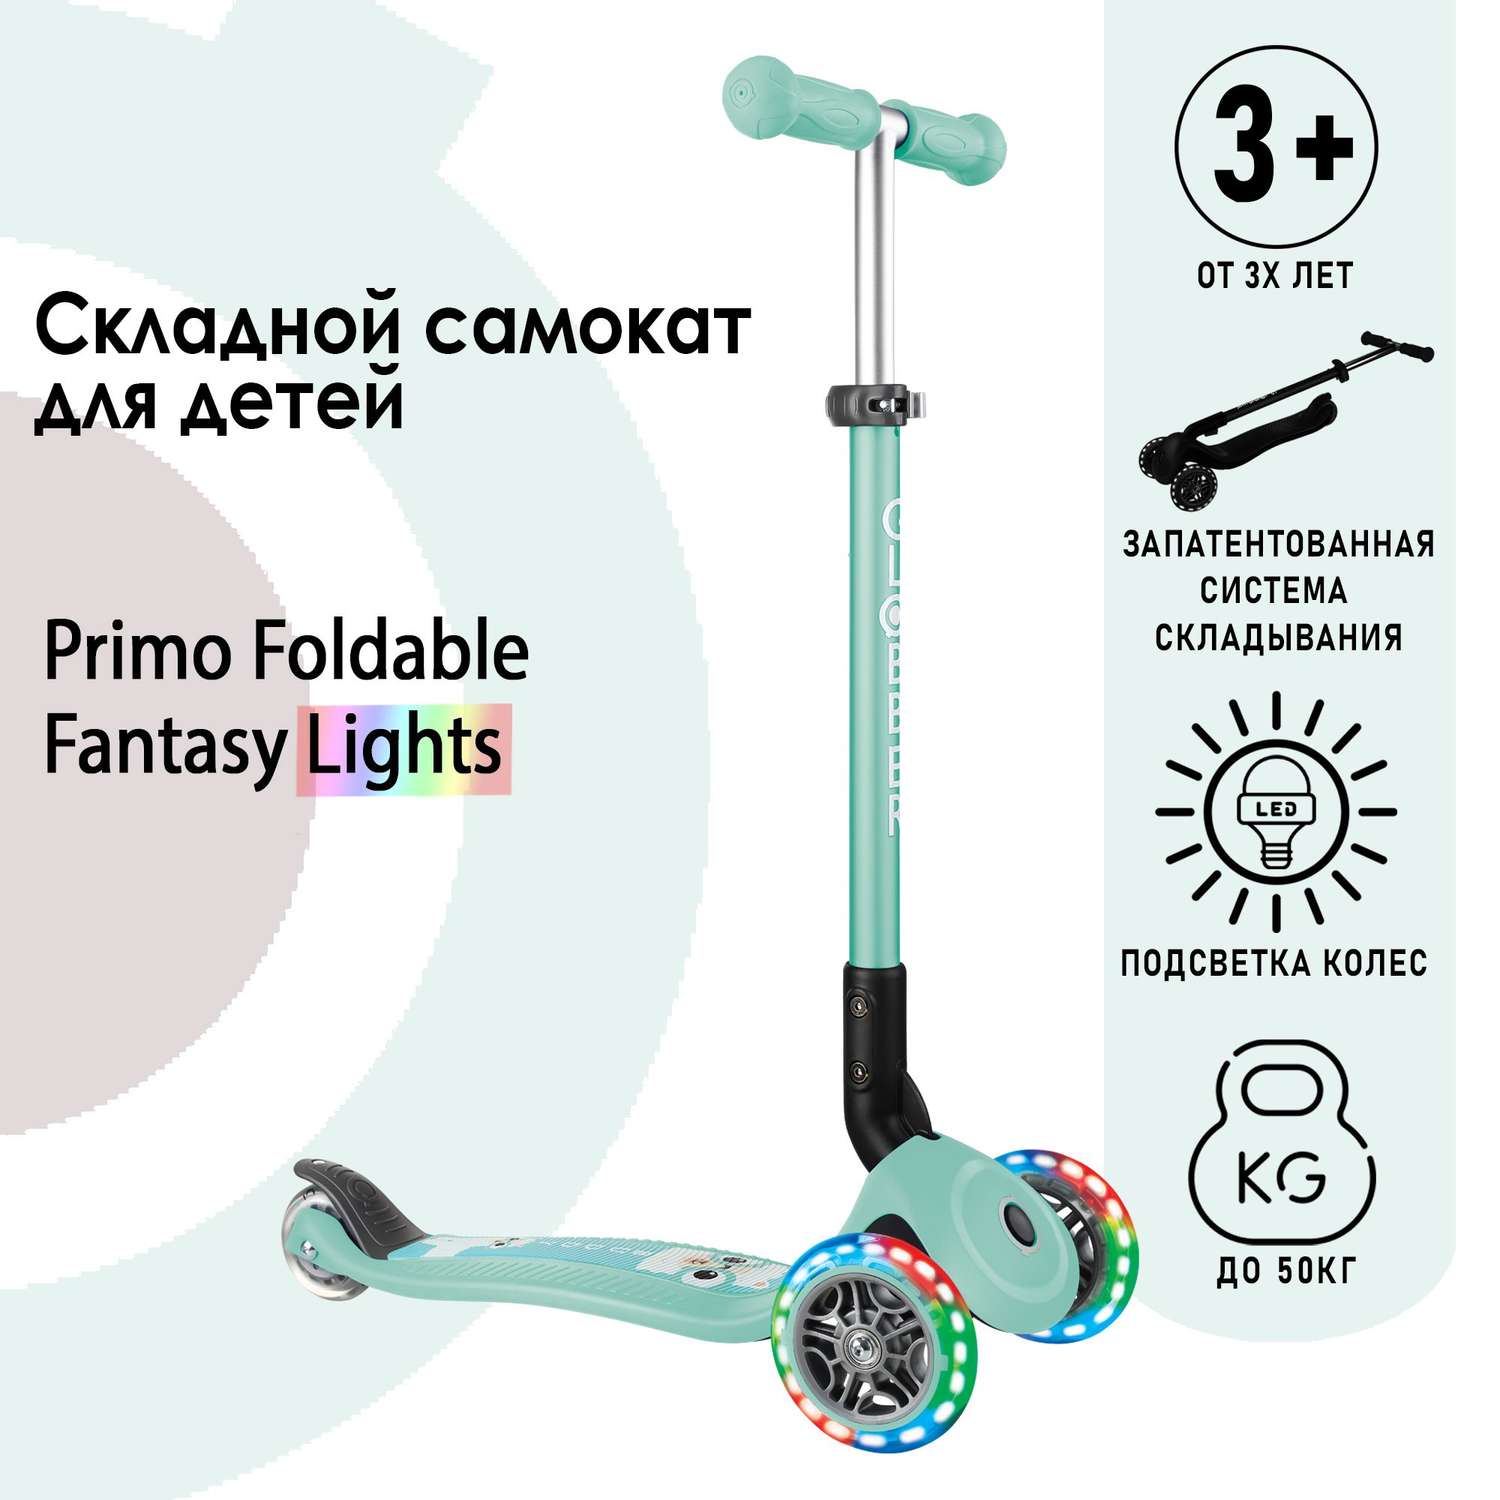 Самокат Globber Primo foldable fantasy lights - фото 1